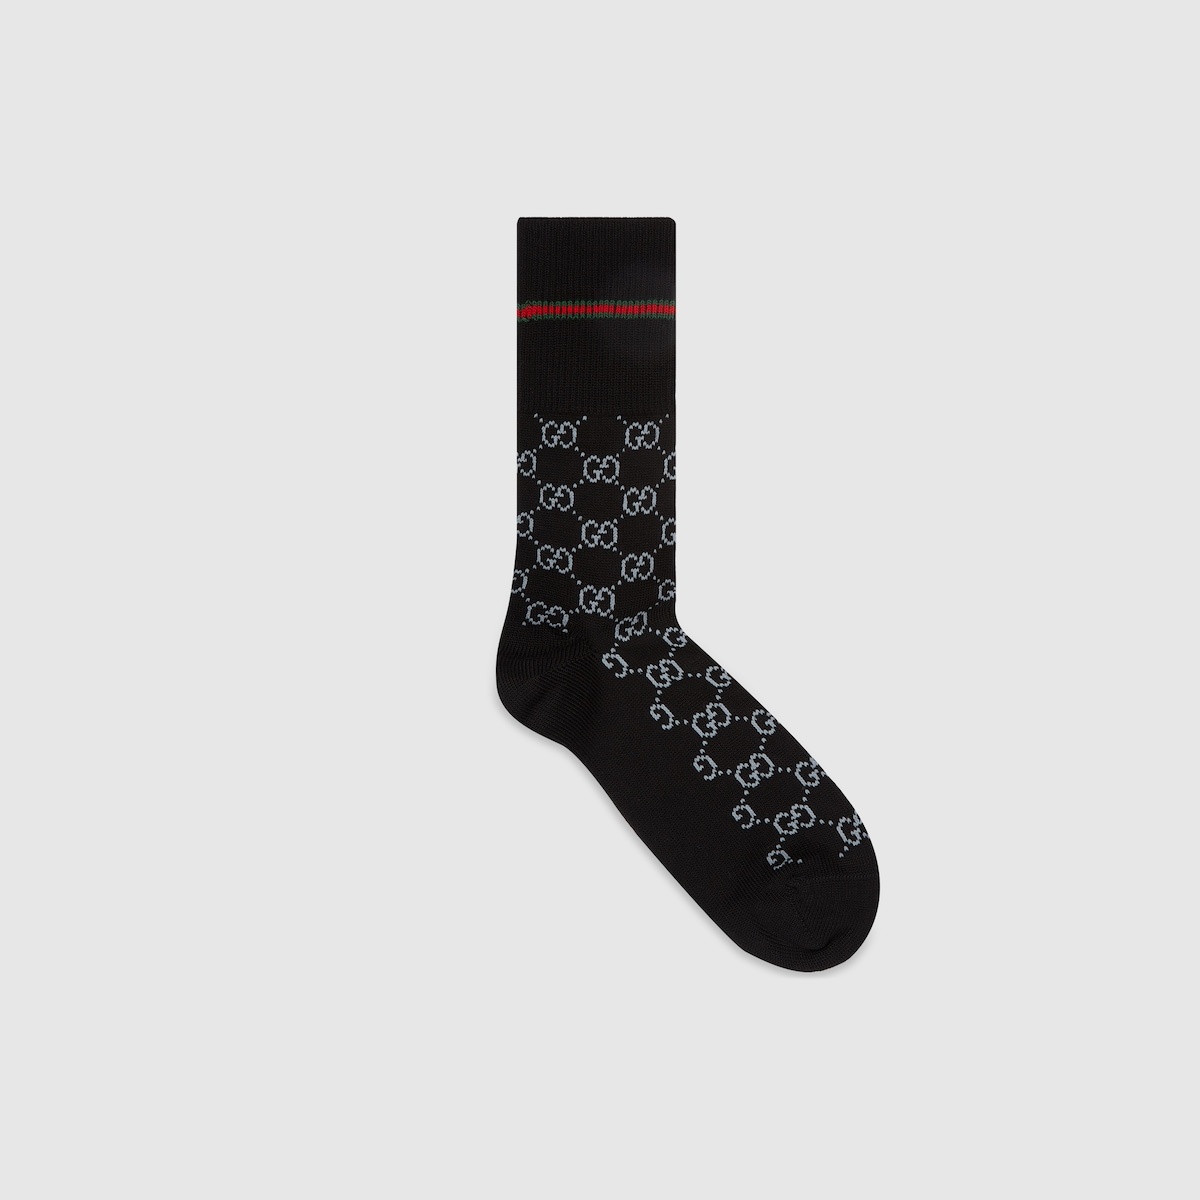 GG cotton blend socks - 1